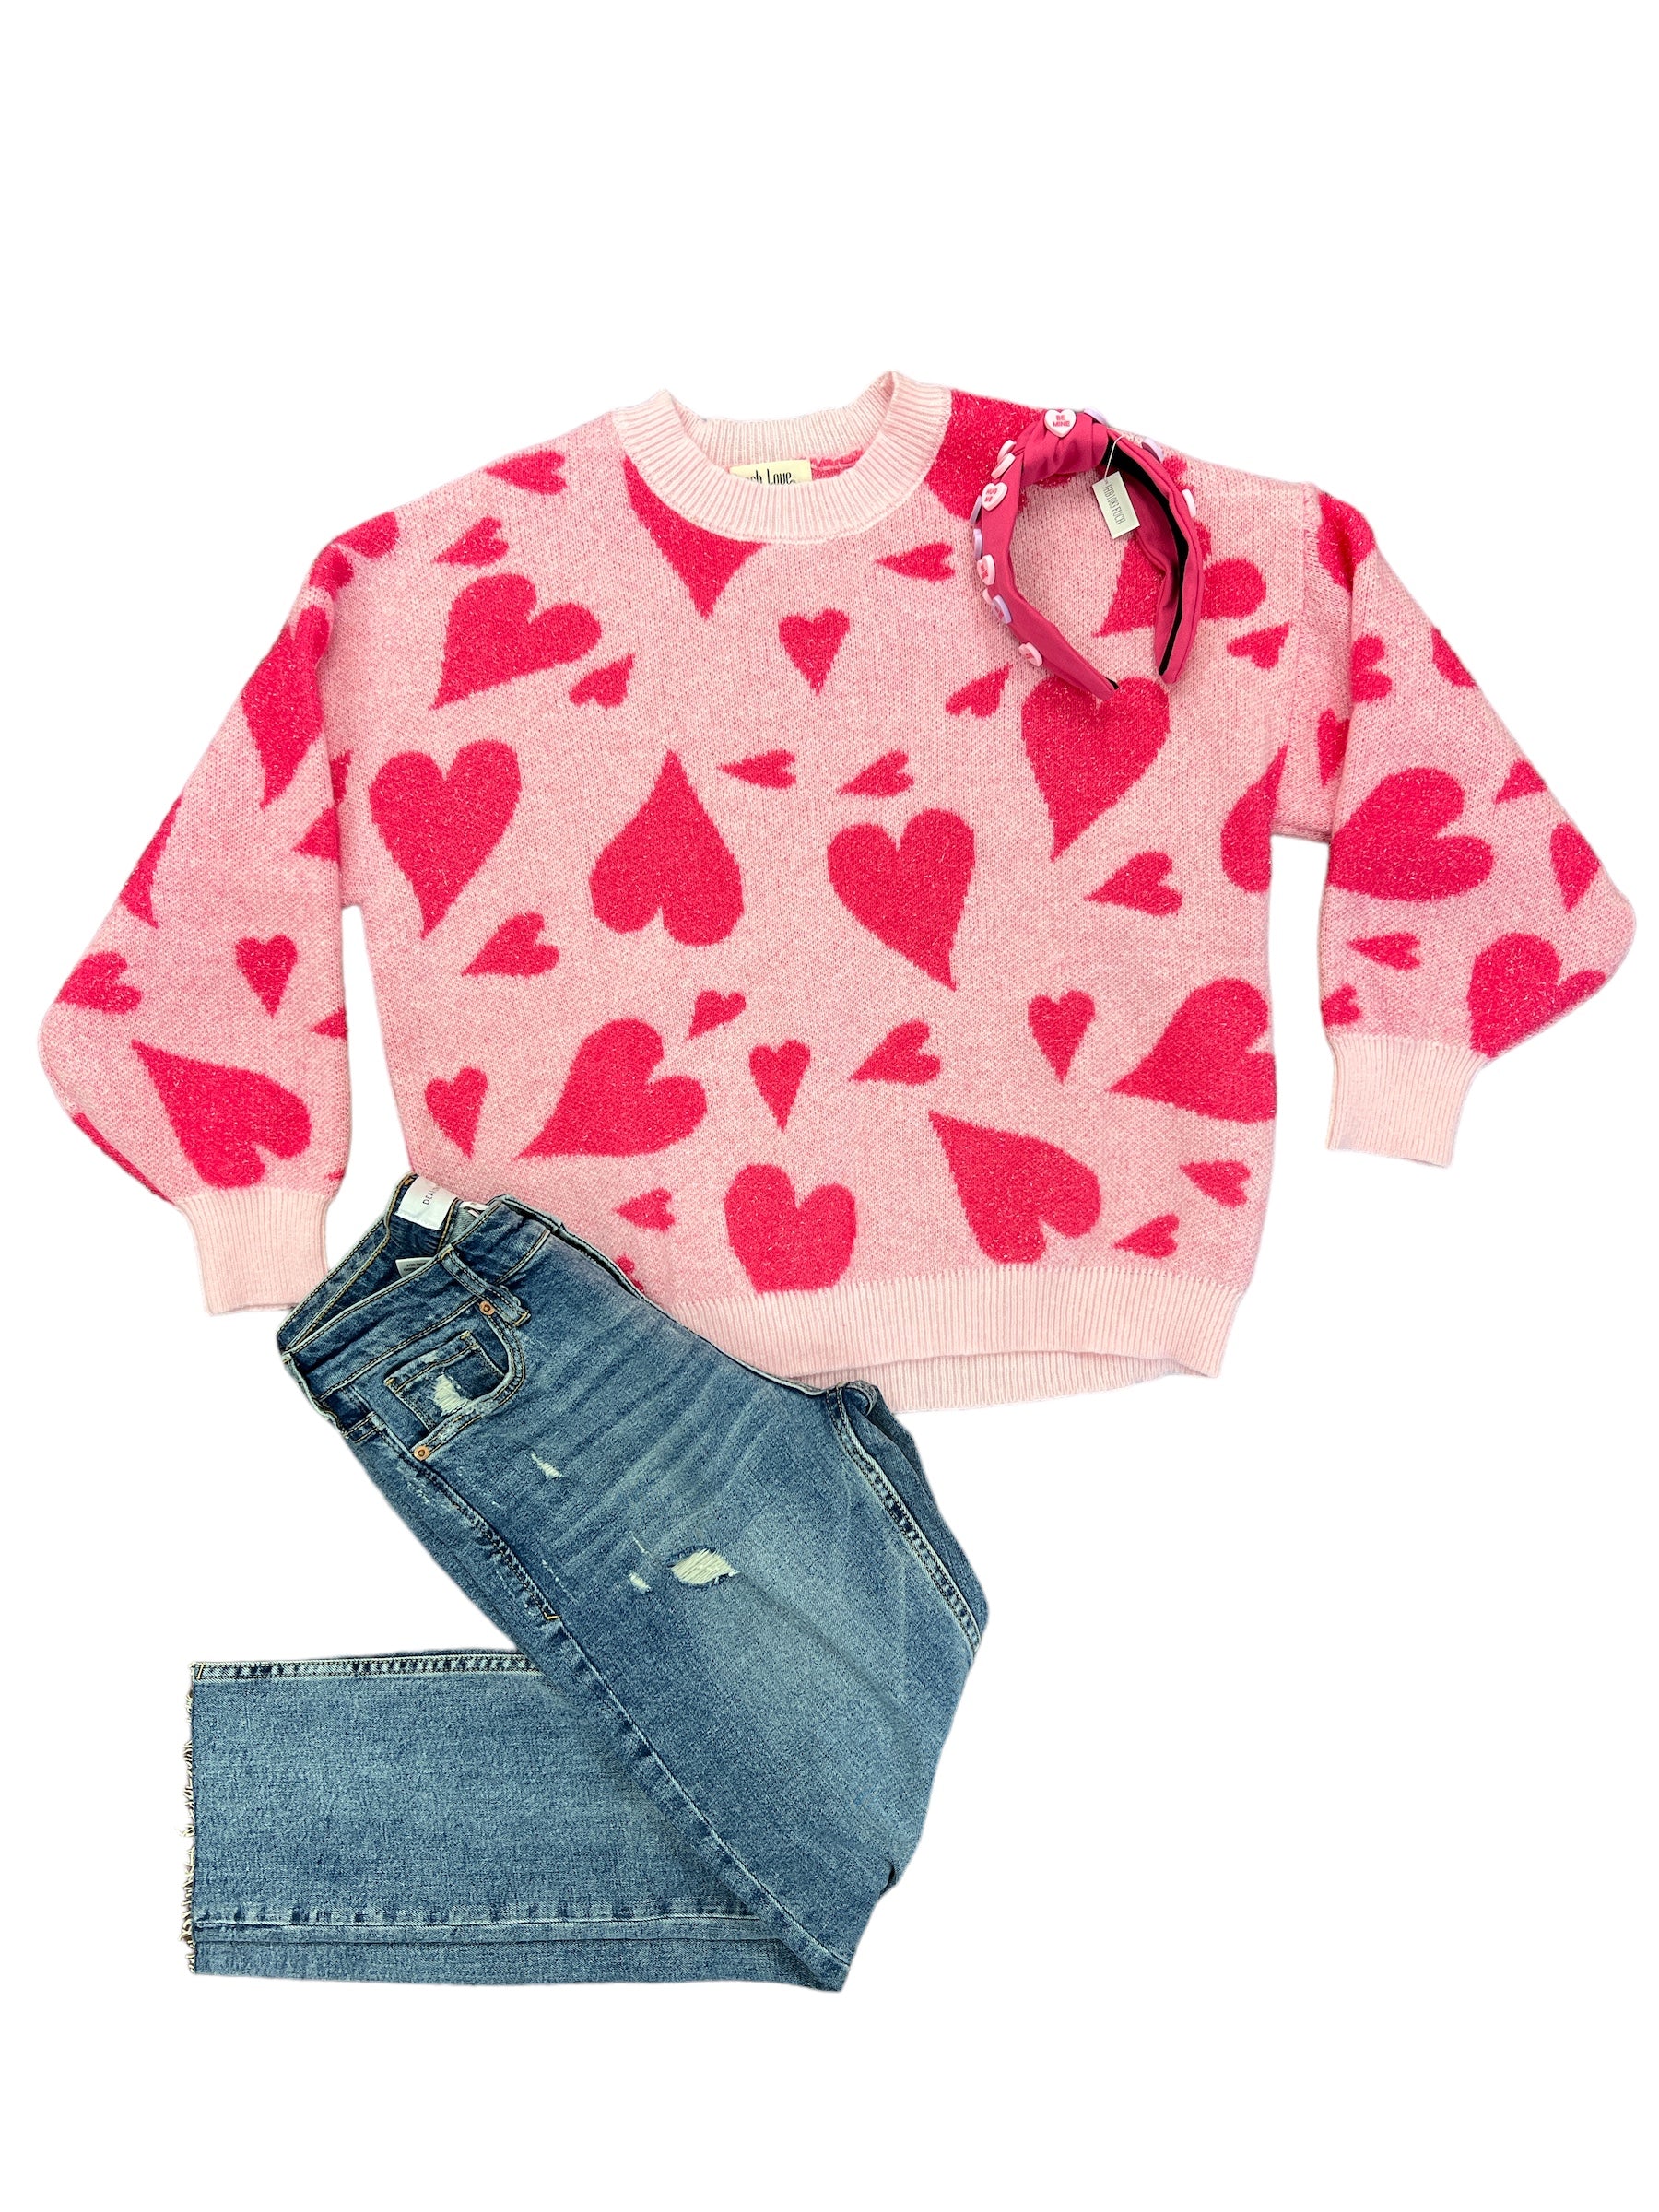 Shiny Hearts Sweater-140 Sweaters, Cardigans & Sweatshirts-Simply Stylish Boutique-Simply Stylish Boutique | Women’s & Kid’s Fashion | Paducah, KY